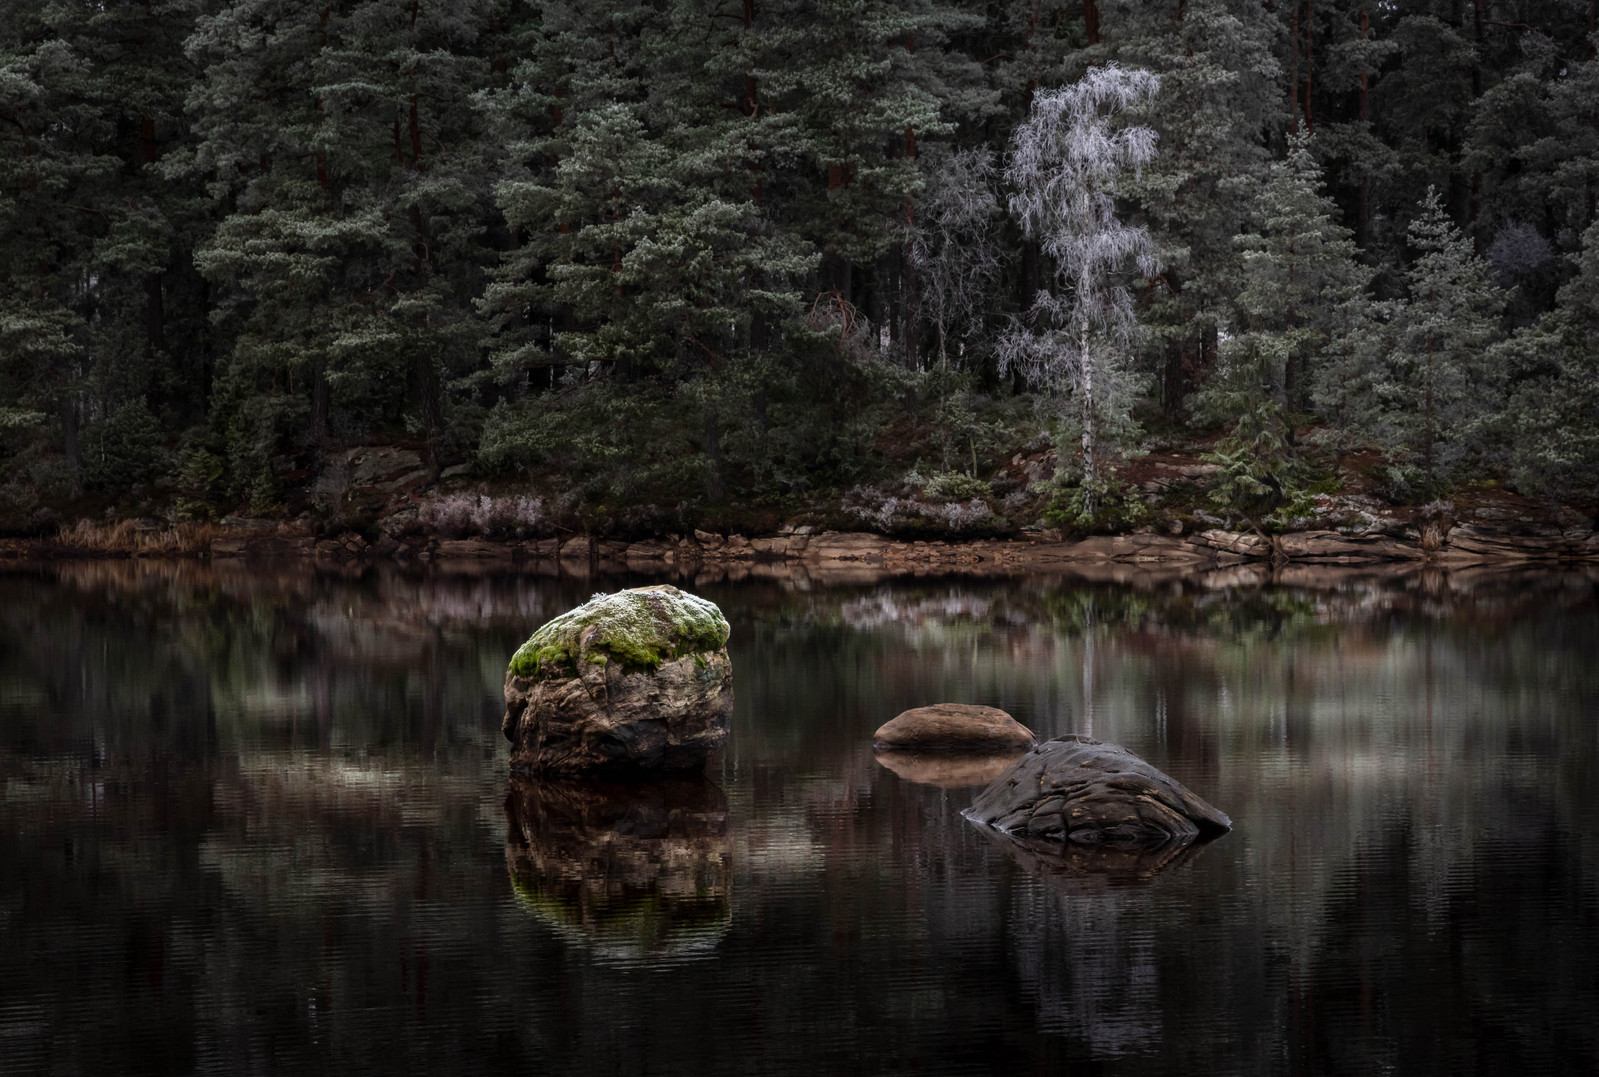 Sten i stilla vatten. I bakgrunden en frostig björk / Stone in still water. In the background a frosty birch